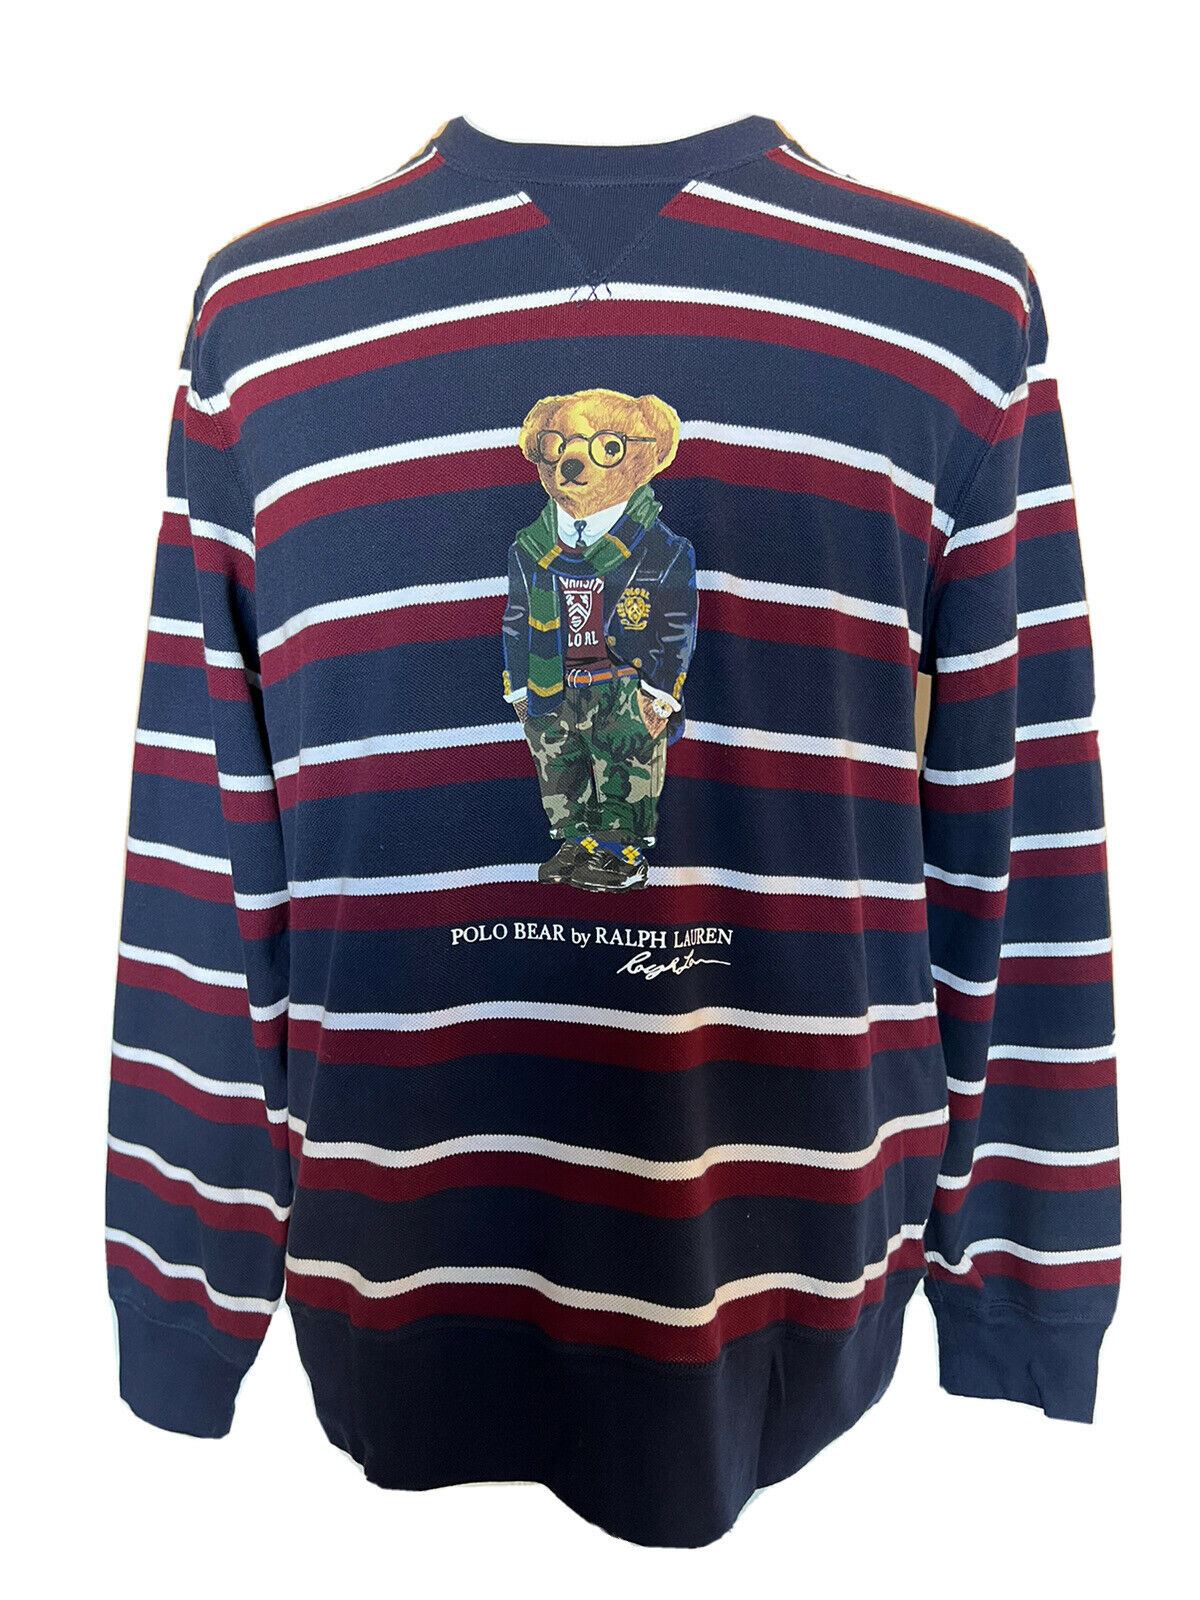 Neu mit Etikett: 125 $ Polo Ralph Lauren Bär gestreiftes Fleece-Sweatshirt Blau XL 